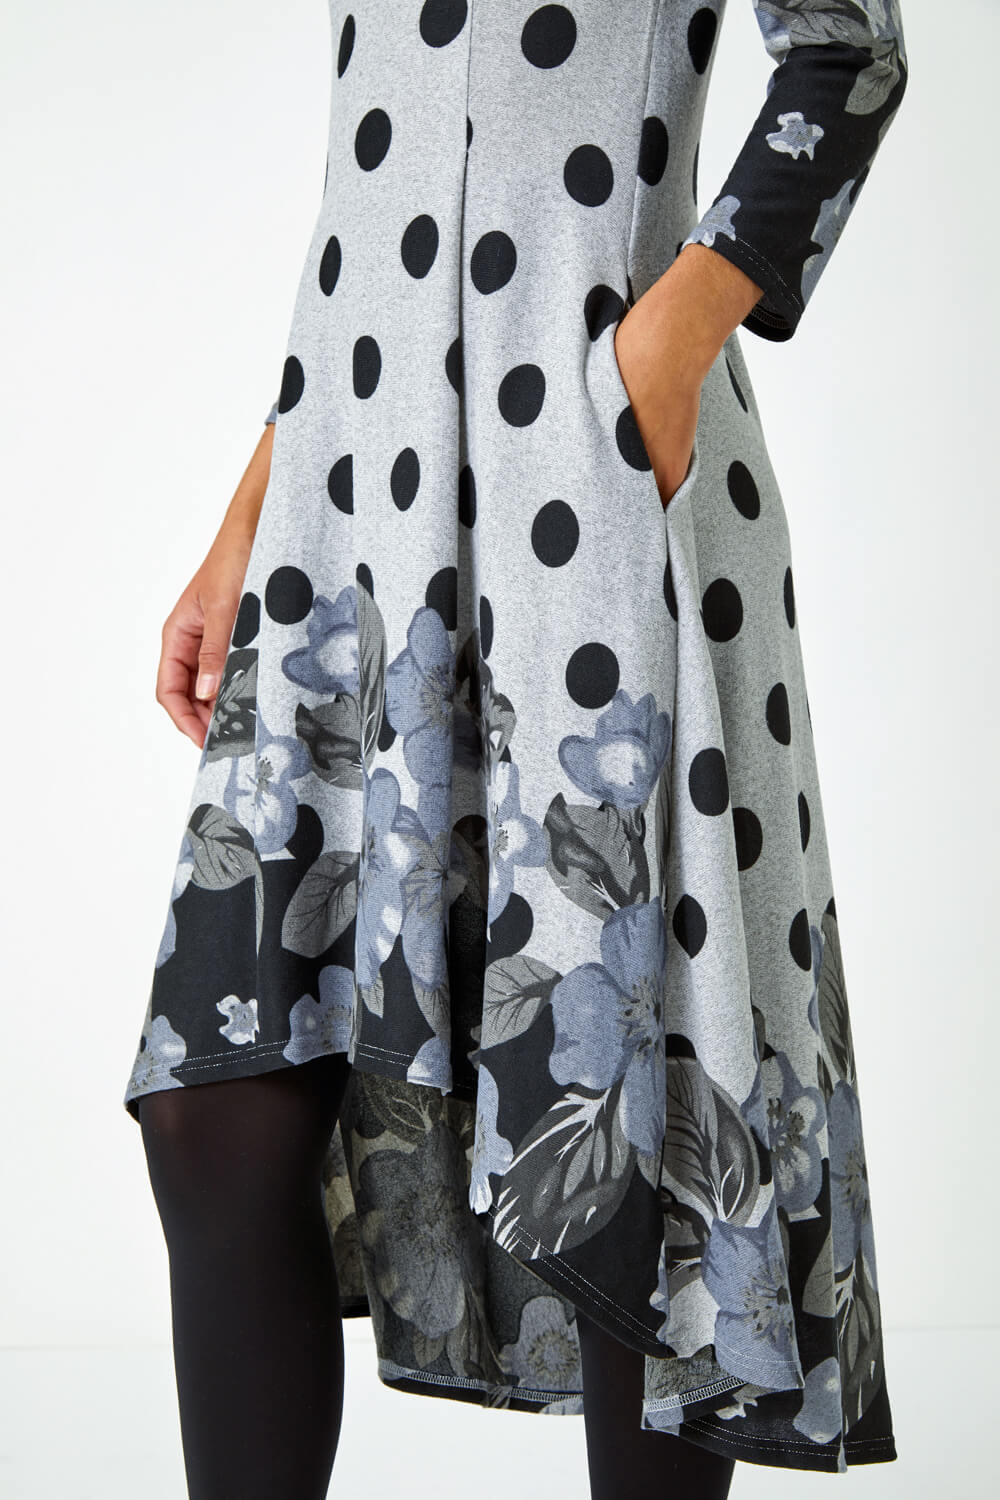 Grey Floral Spot Border Print Stretch Dress, Image 5 of 5